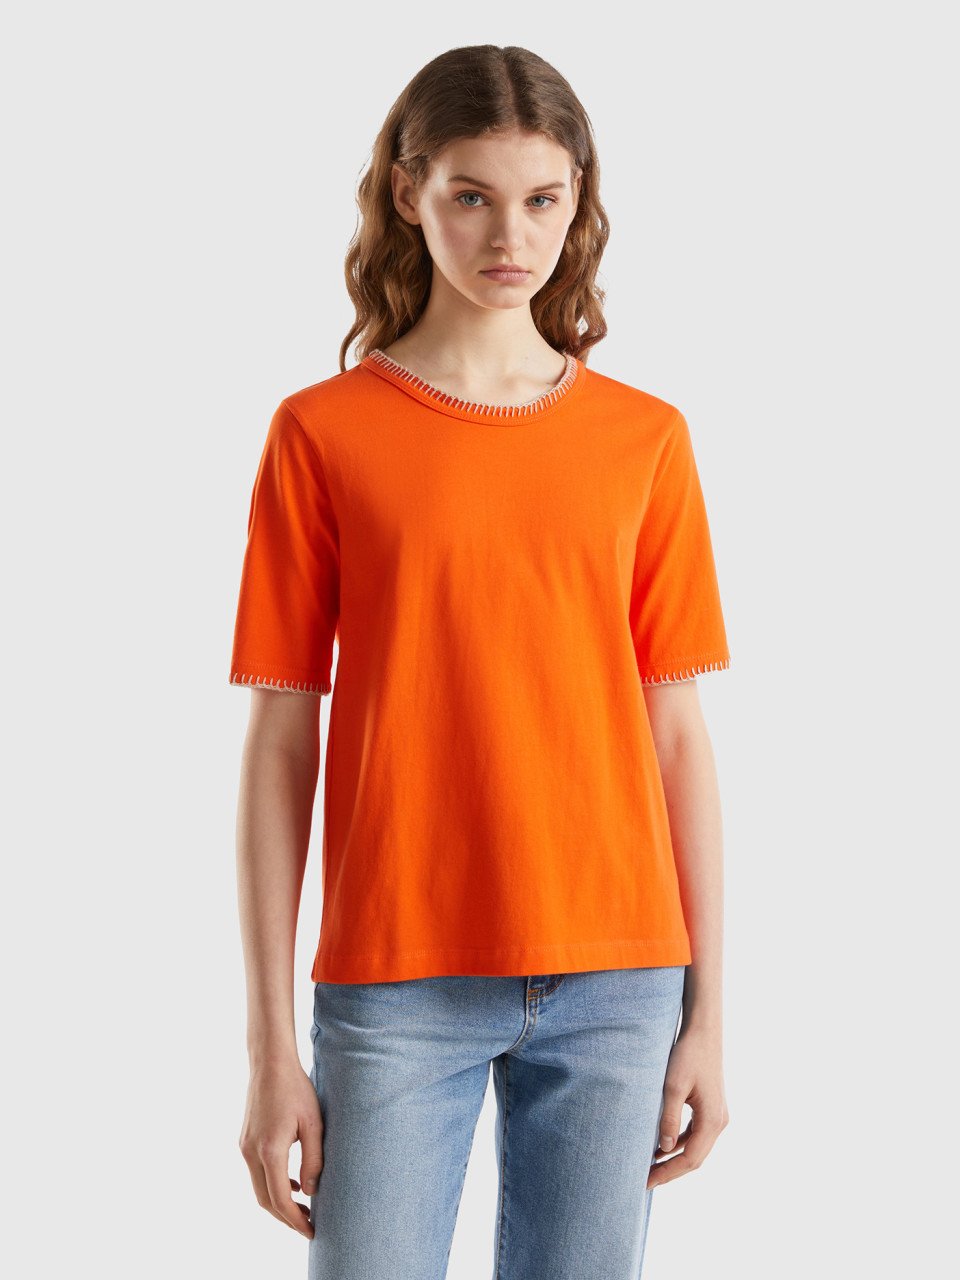 Benetton, Cotton Crew Neck T-shirt, Orange, Women